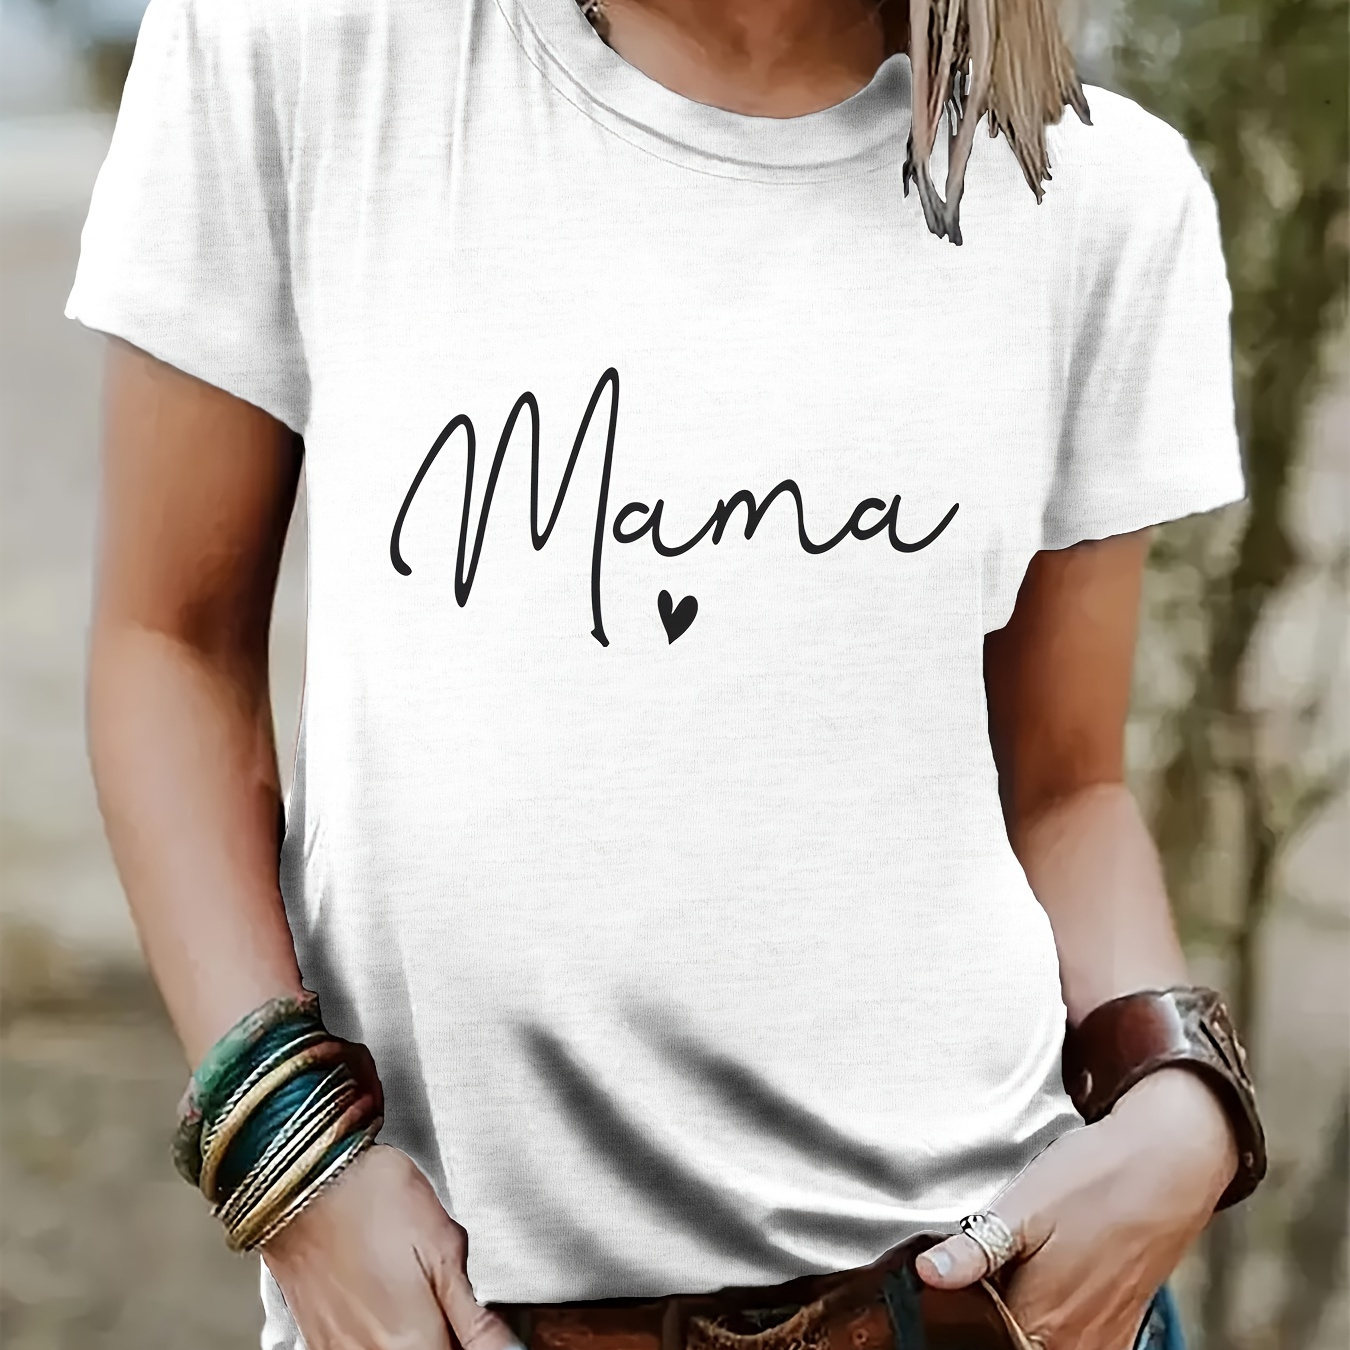 

Mama Print Crew Neck T-shirt, Casual Short Sleeve Summer Top, Women's Clothing